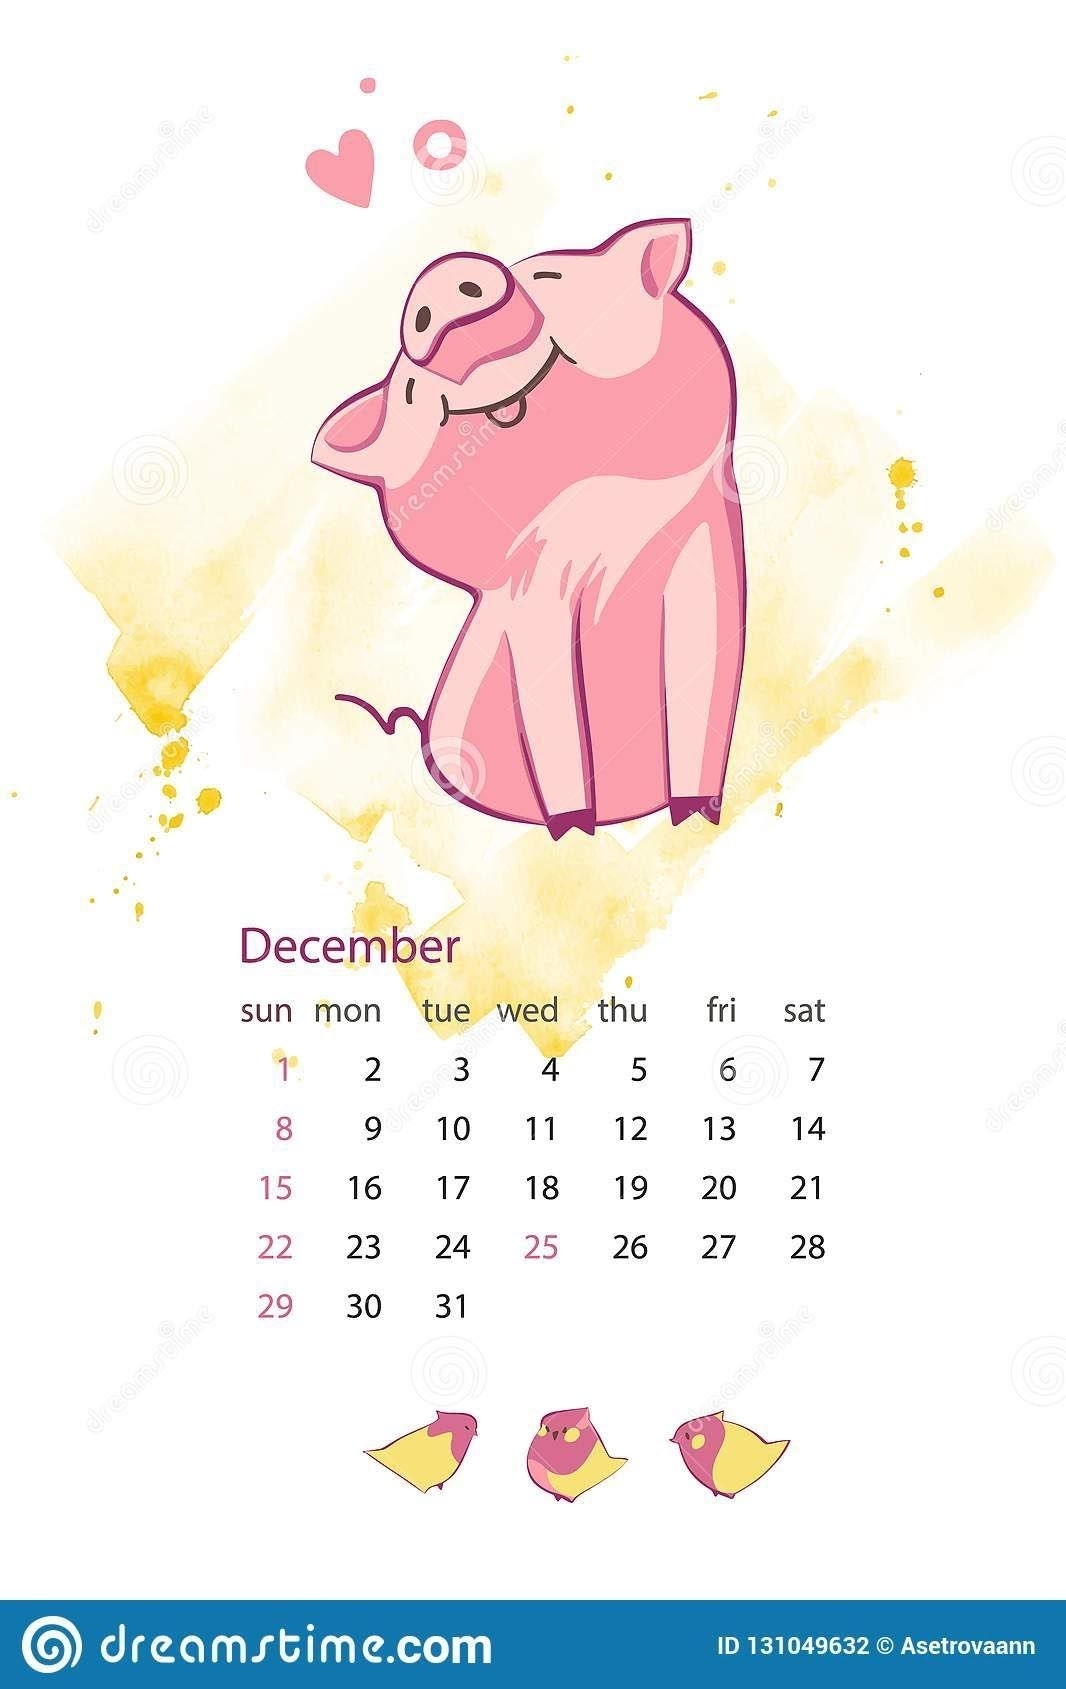 Calendar Printables Design Calendar Ideas Diy Printable Calendar regarding Free Printable Advent Calendars Wallpaper